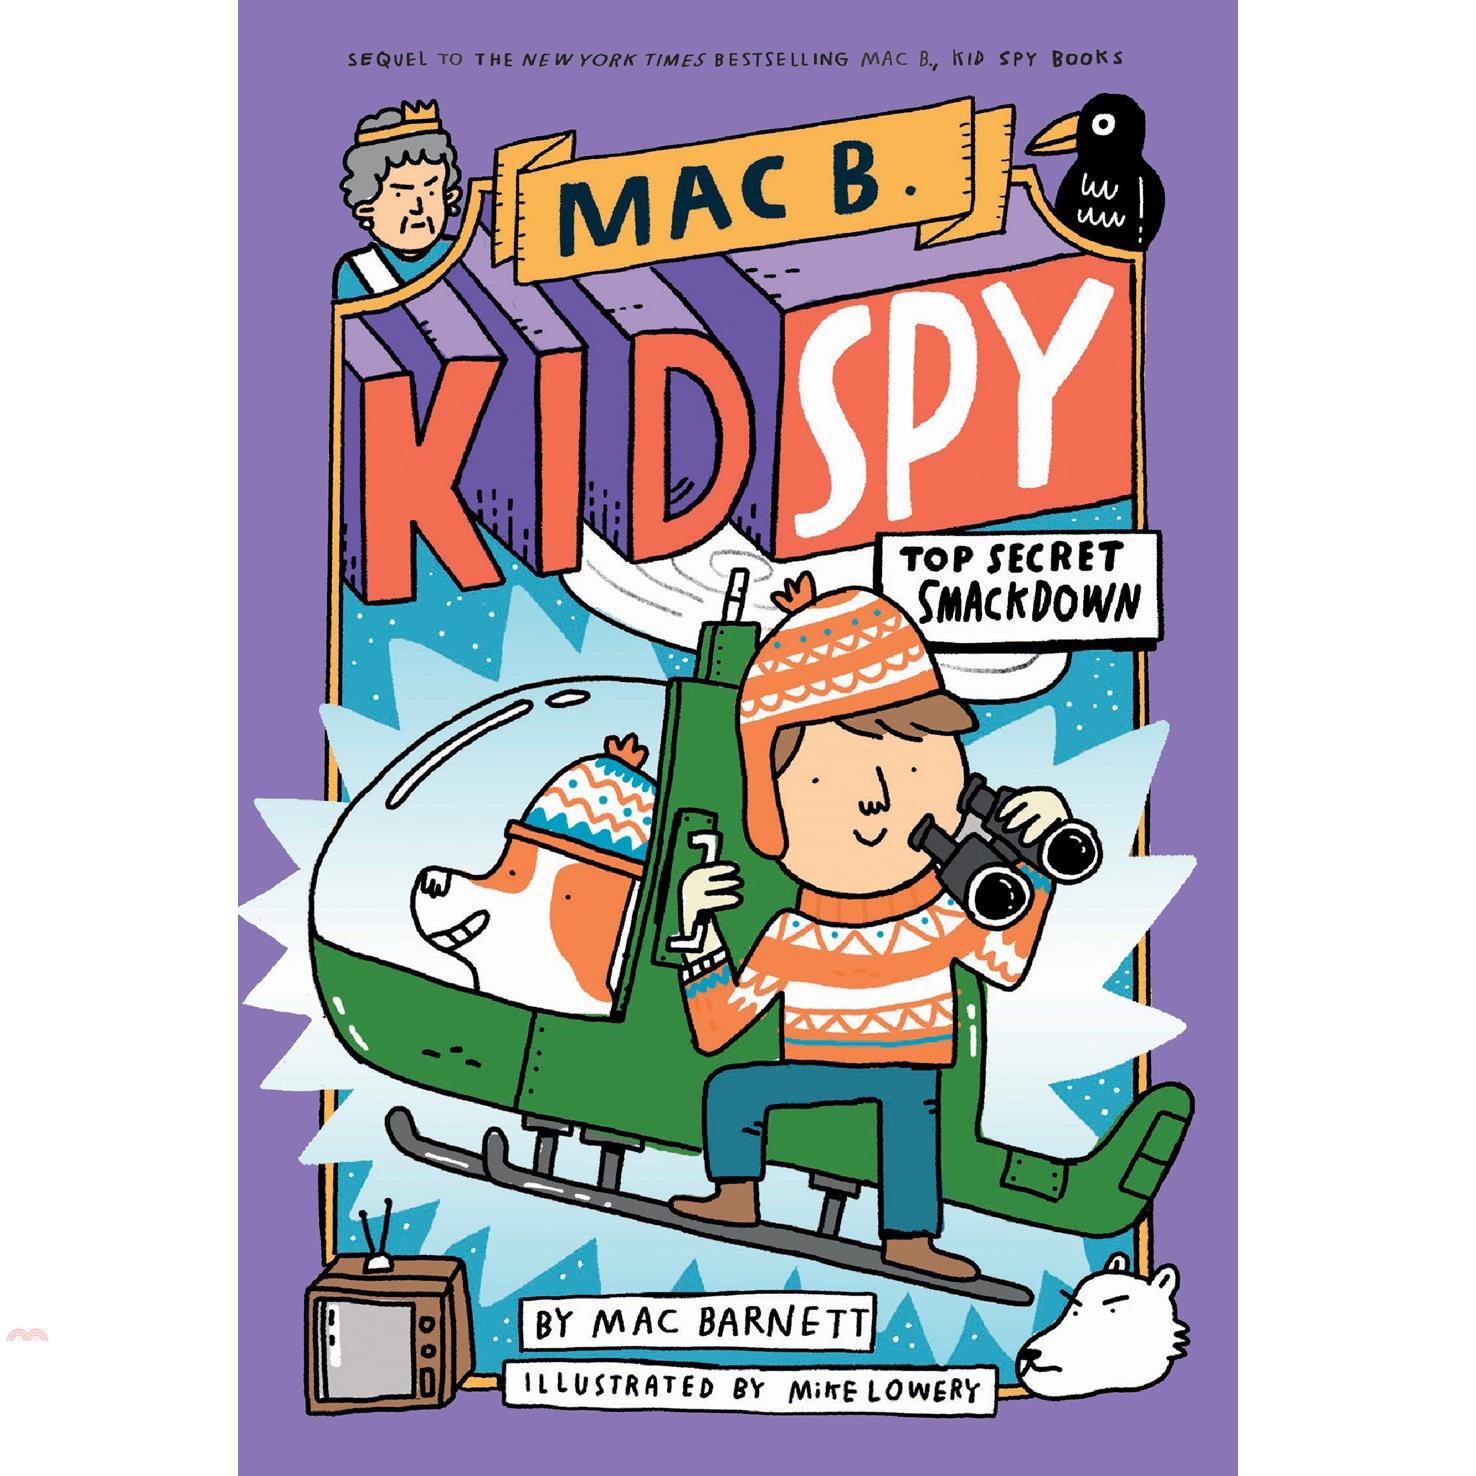 Mac B. Kid Spy 3: Top Secret Smackdown